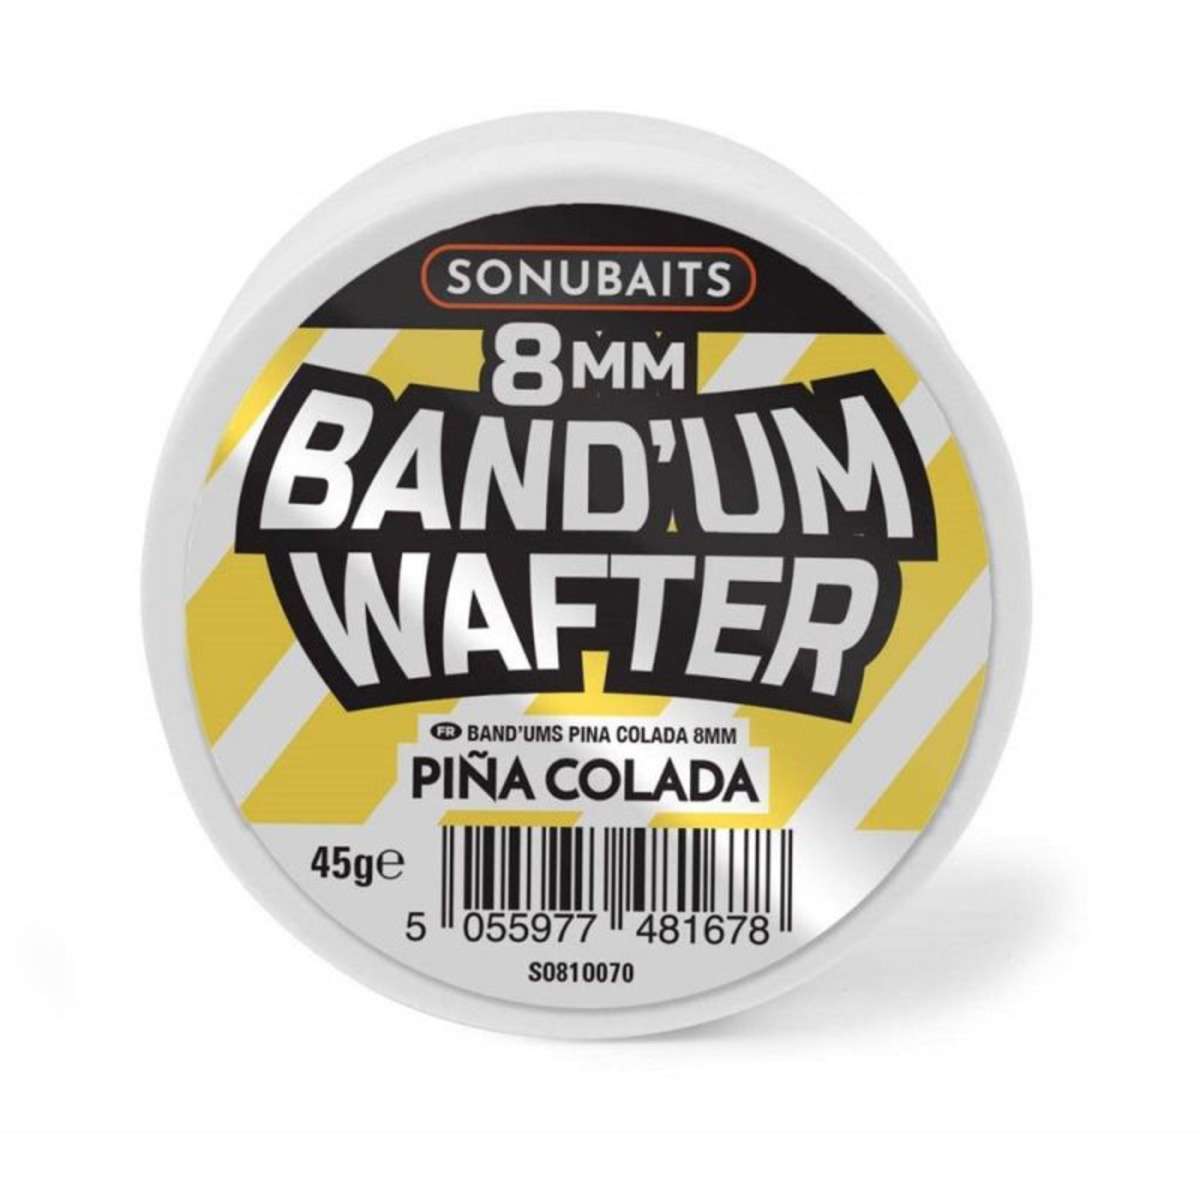 Sonubaits Band’um Wafters - 8 mm - Pina Colada